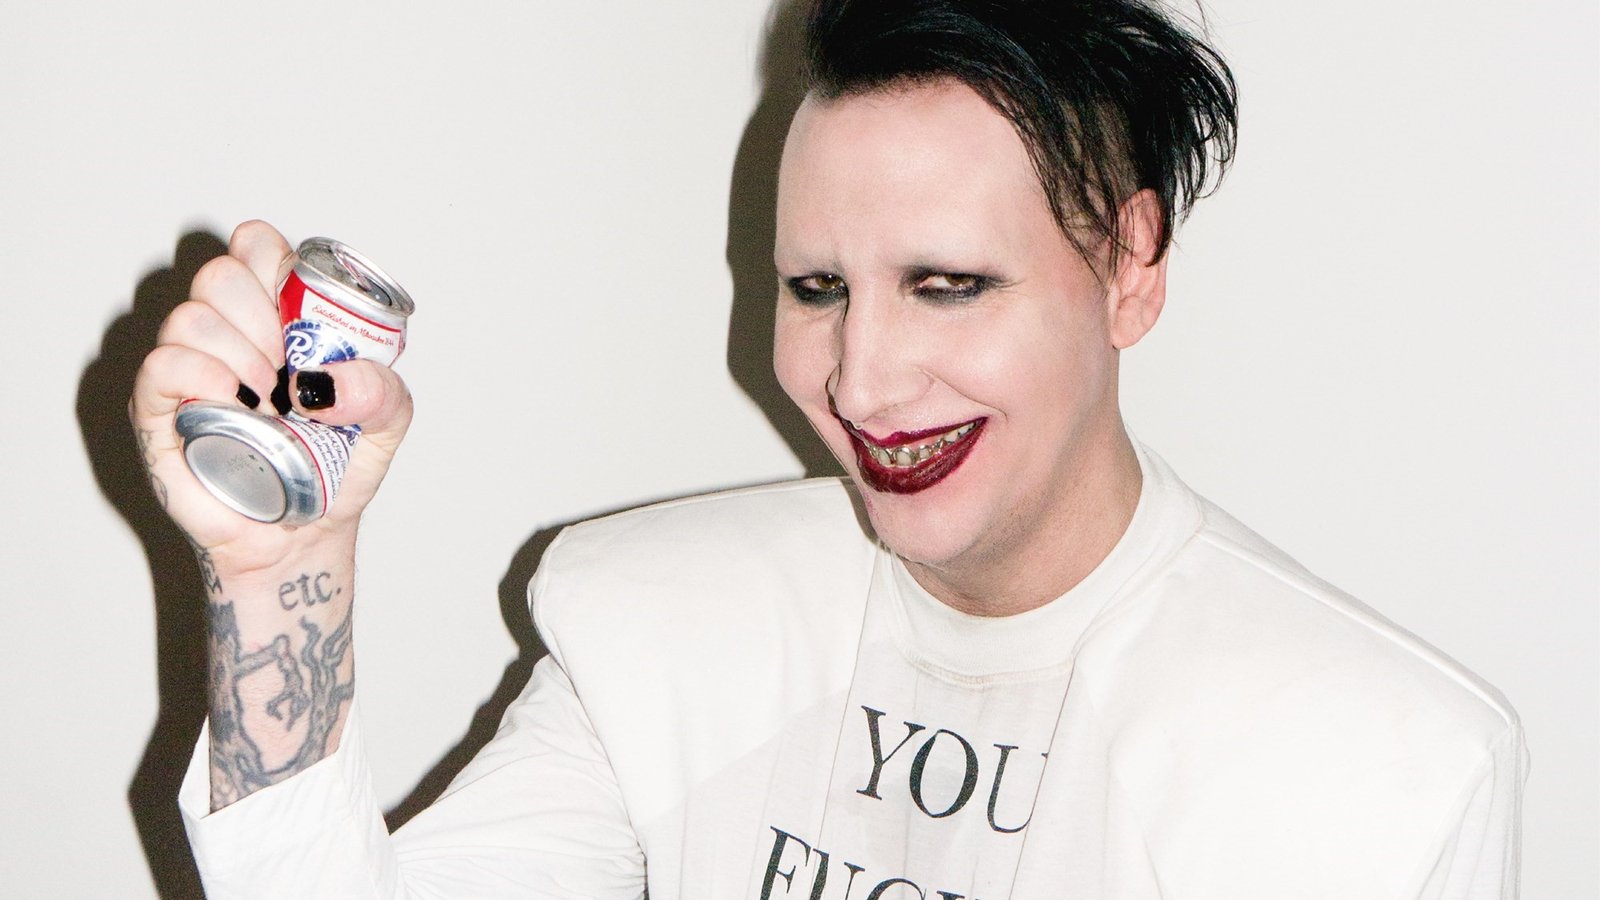 Marilyn Manson's religion in question